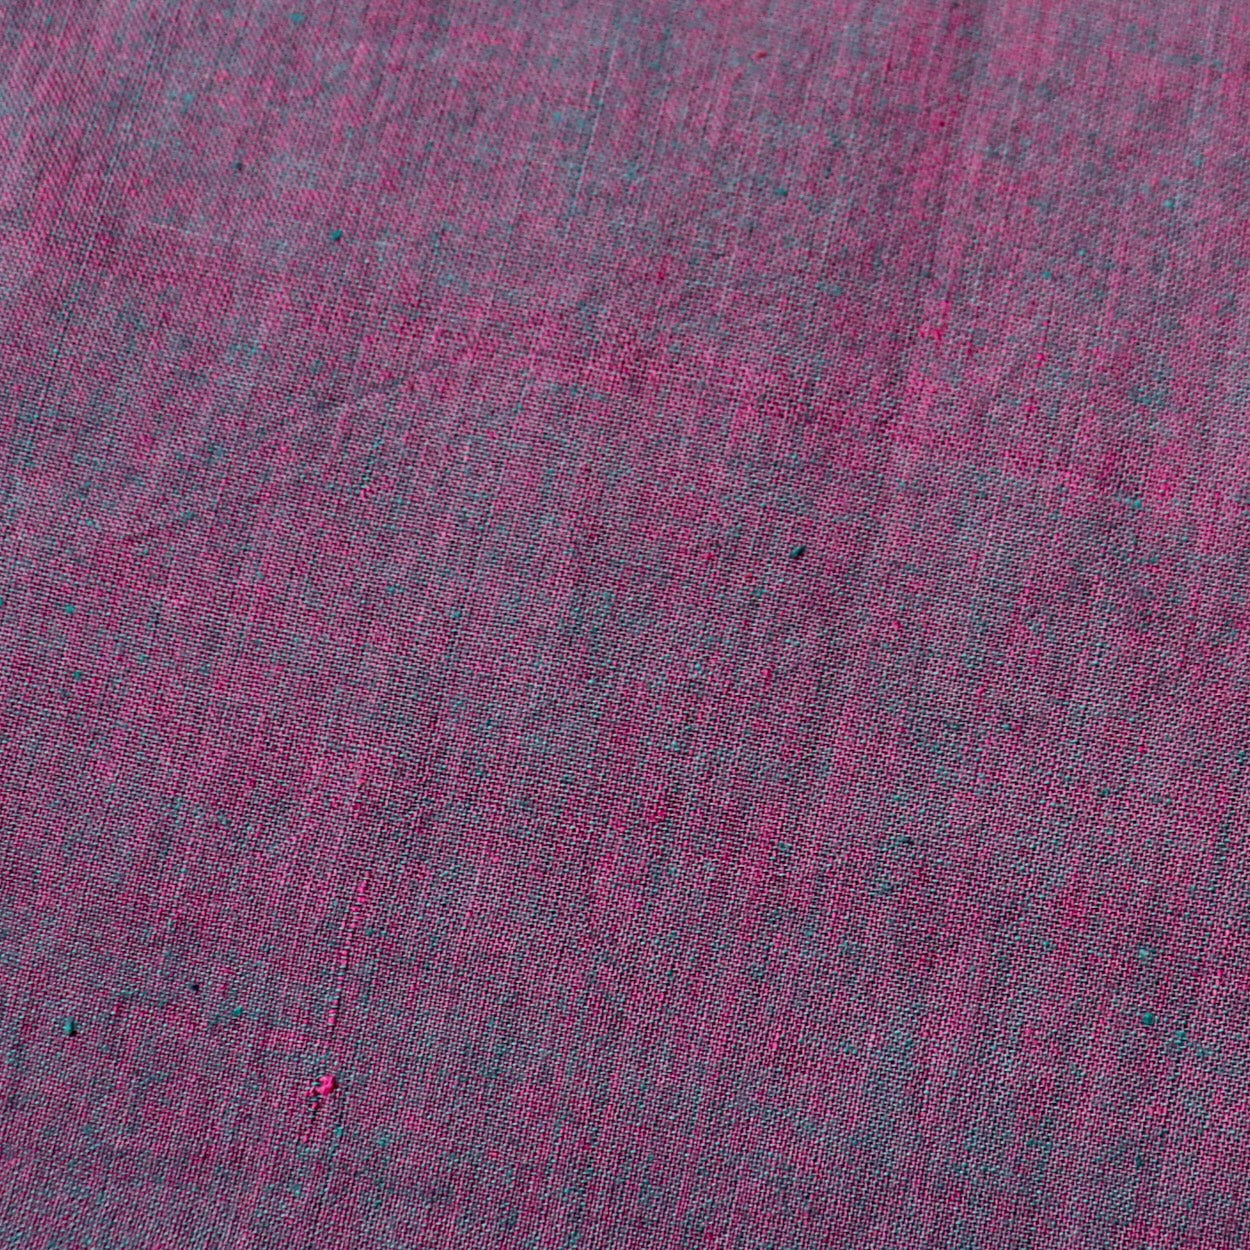 handwoven khadi cotton fabric purple and turquoise blue shot shirting